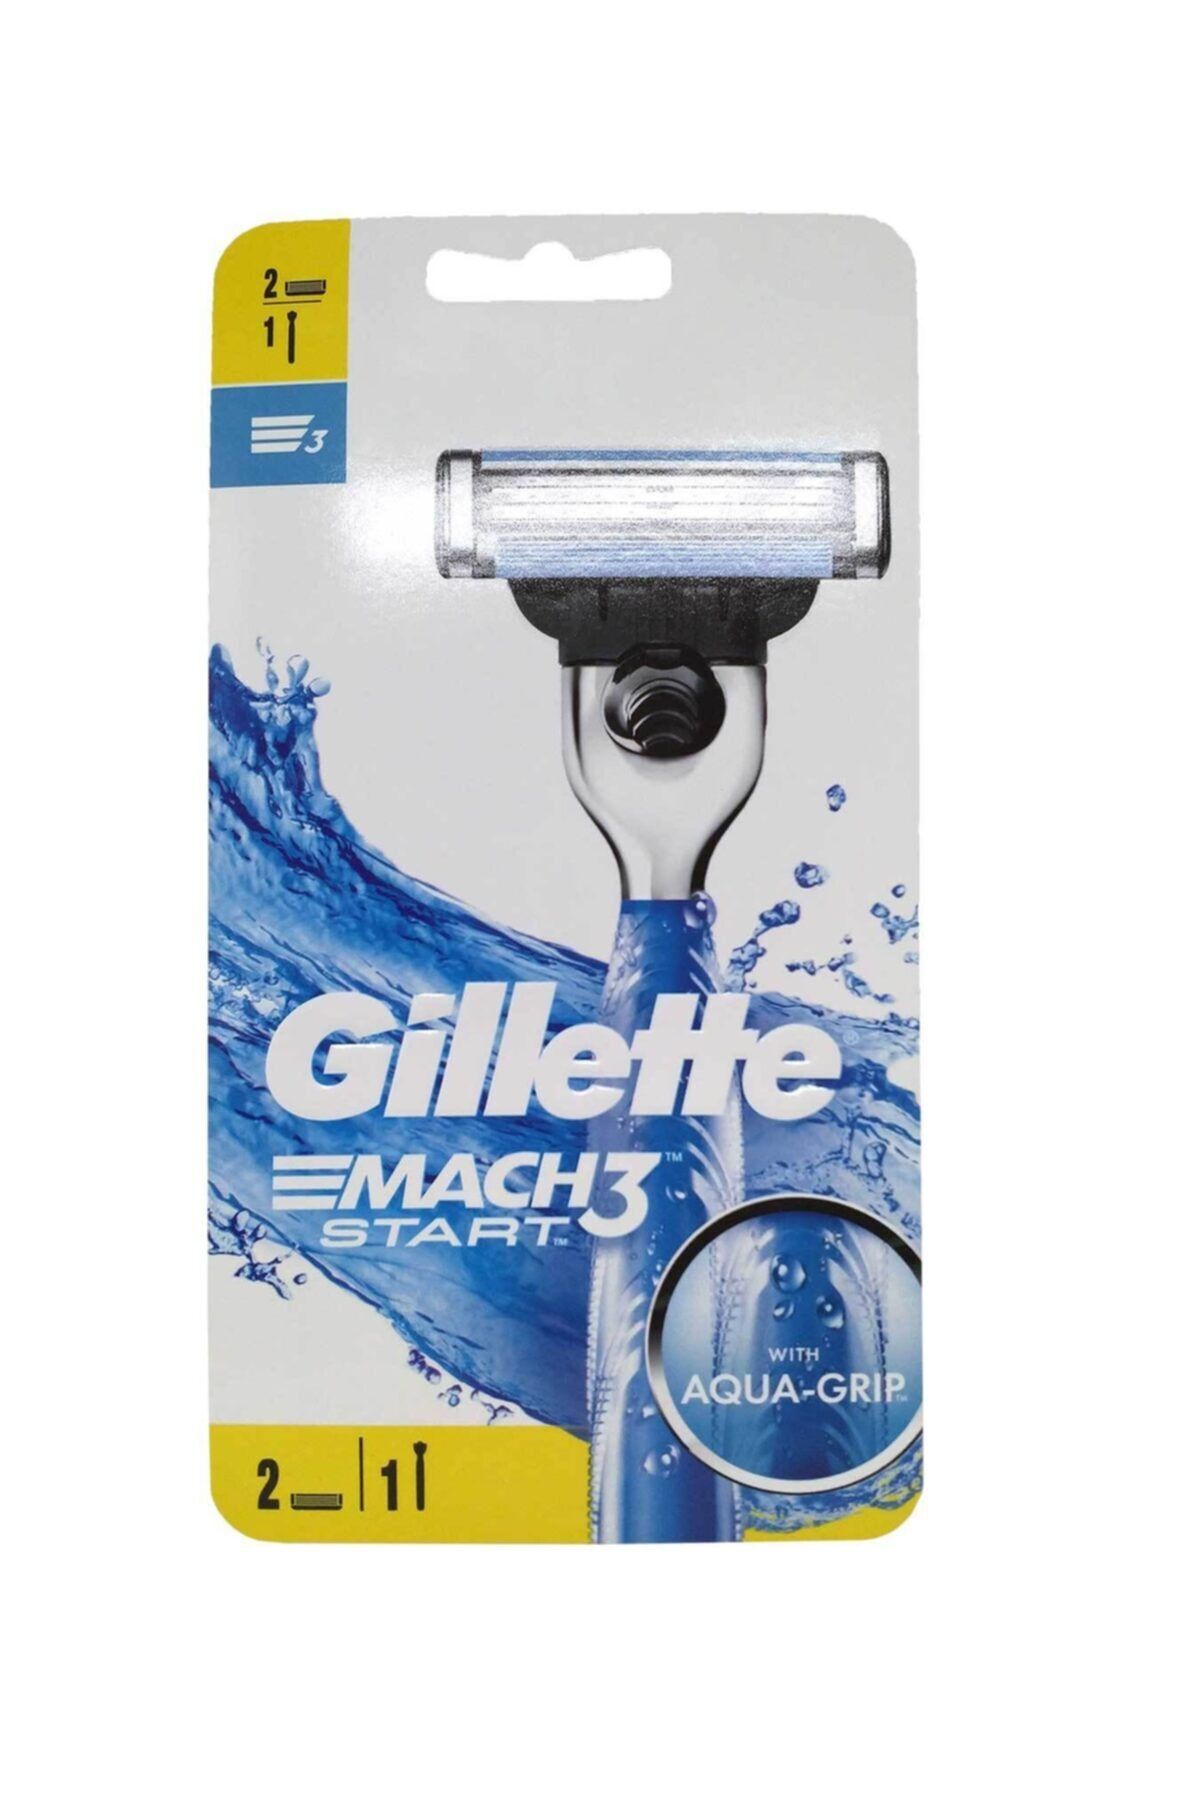 Gillette Mach3 Start Aqua-grip 2 Up Tıraş Makinesi